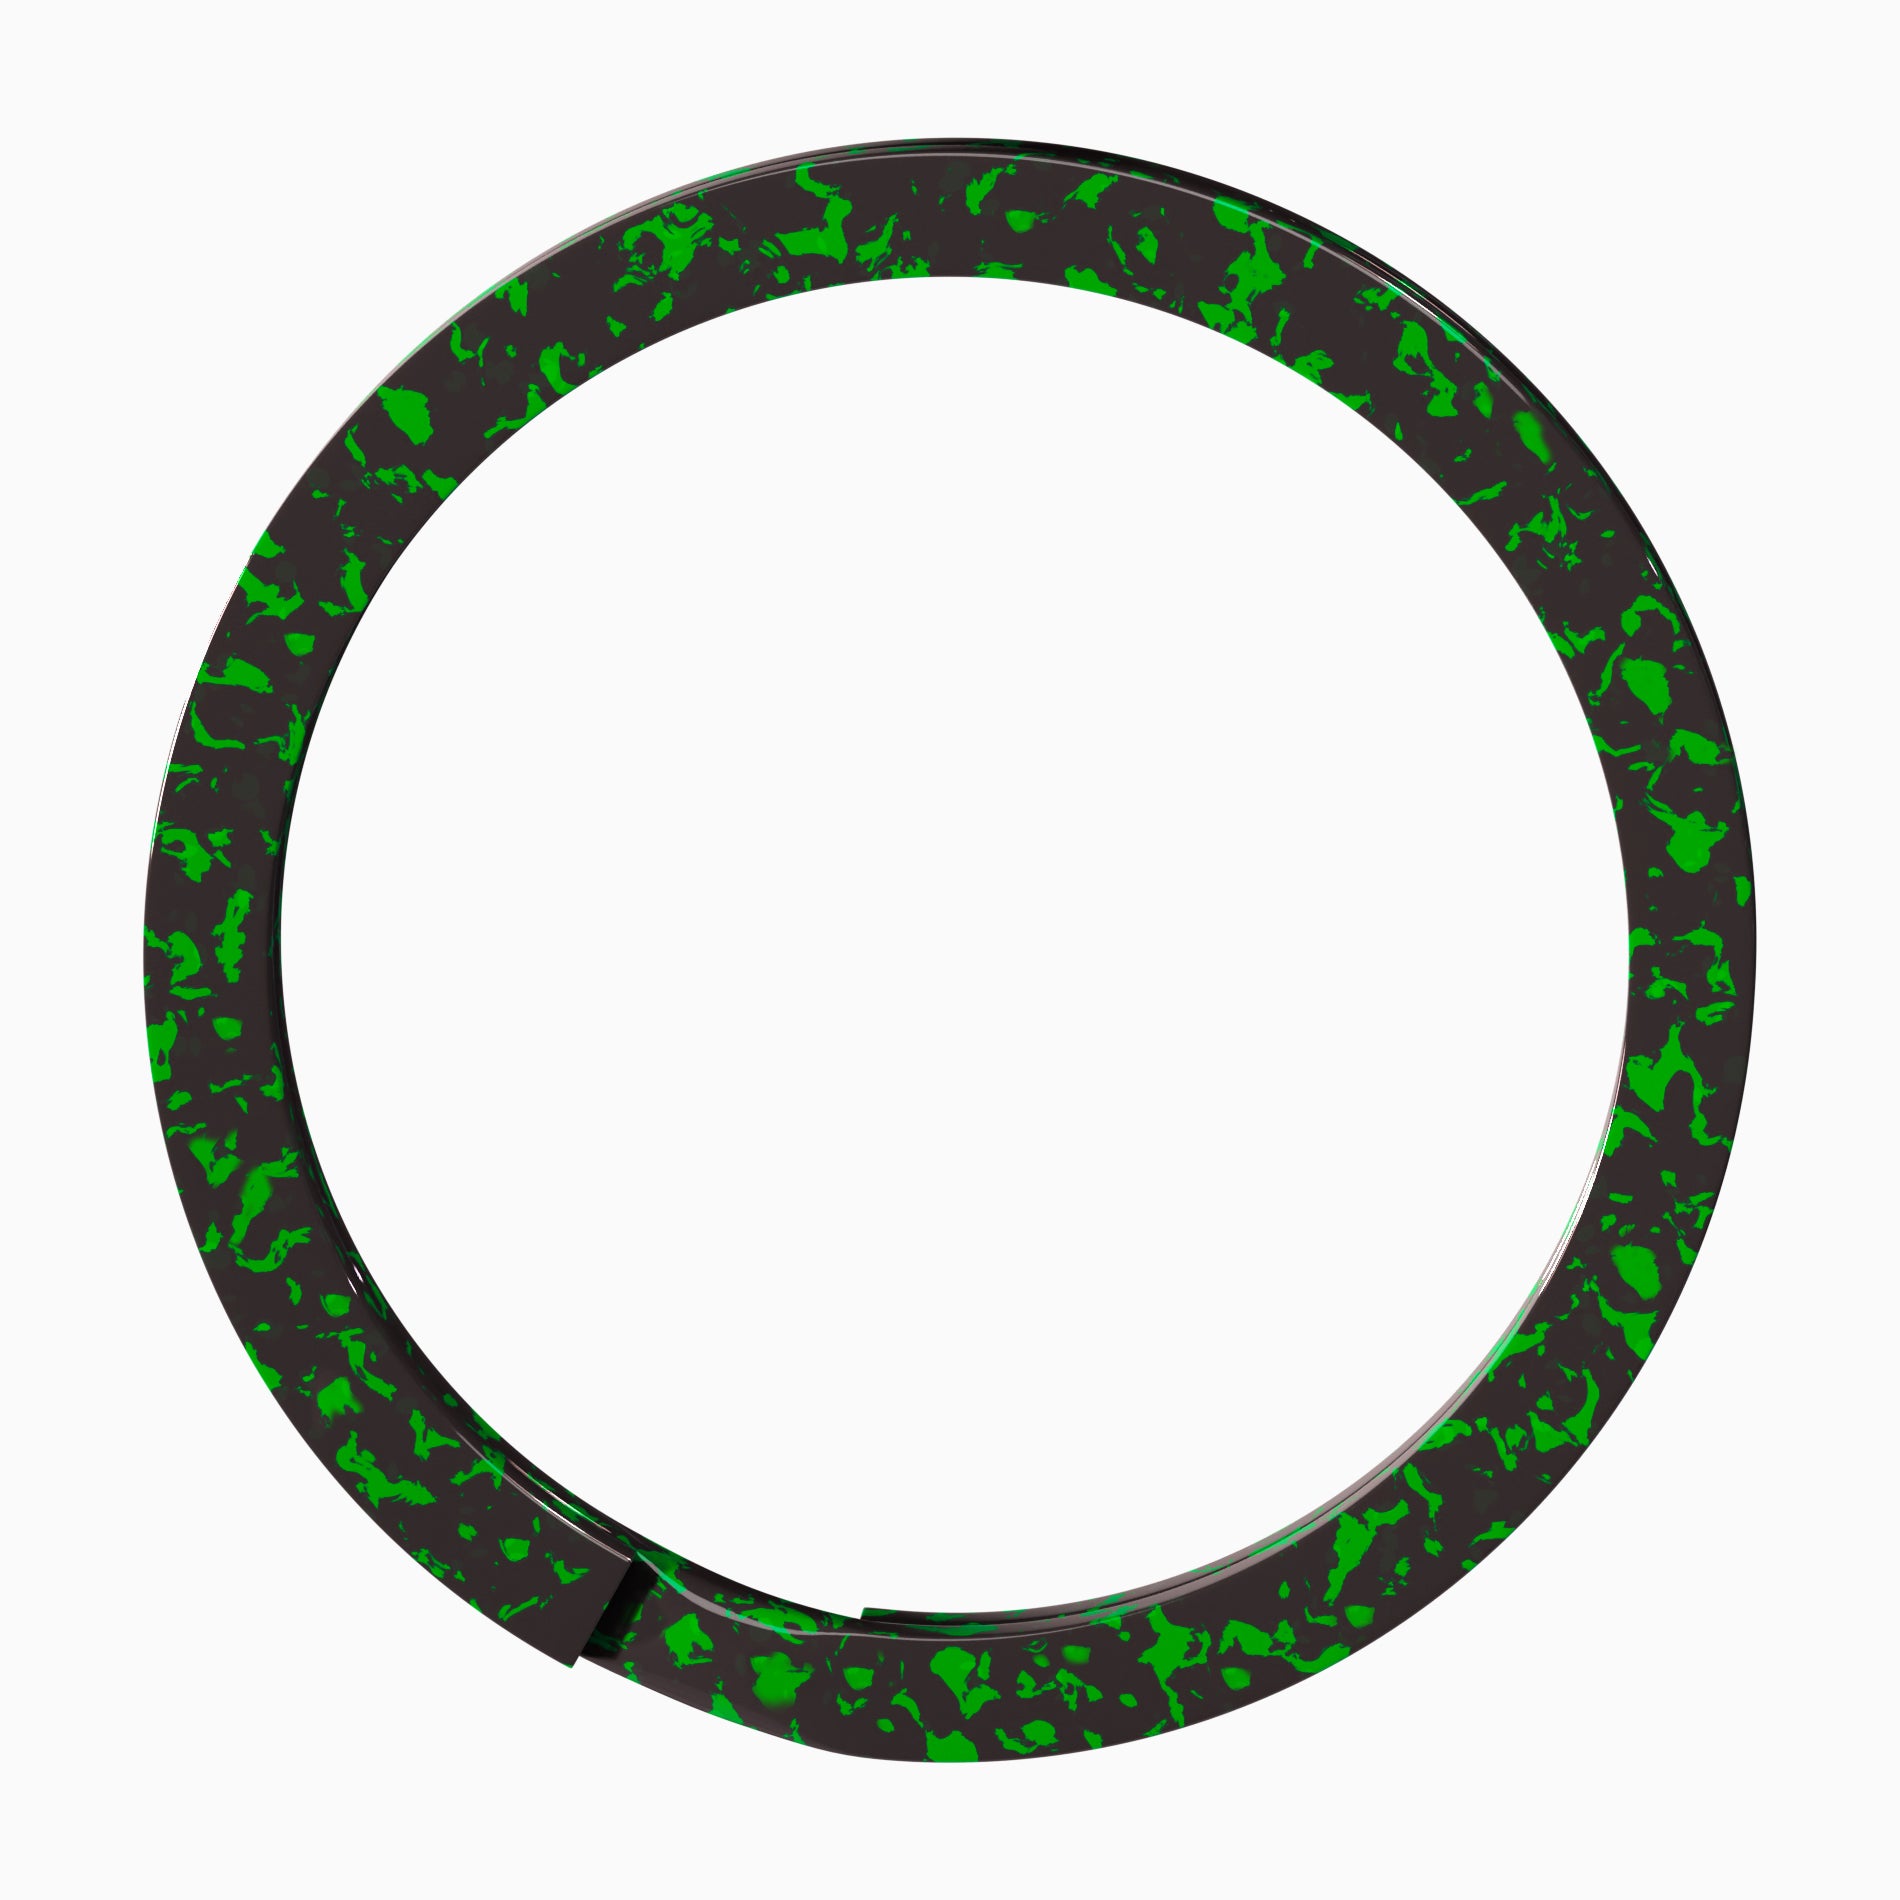 1.18" Premium Key Rings 5x Coatings (Iguana Green)